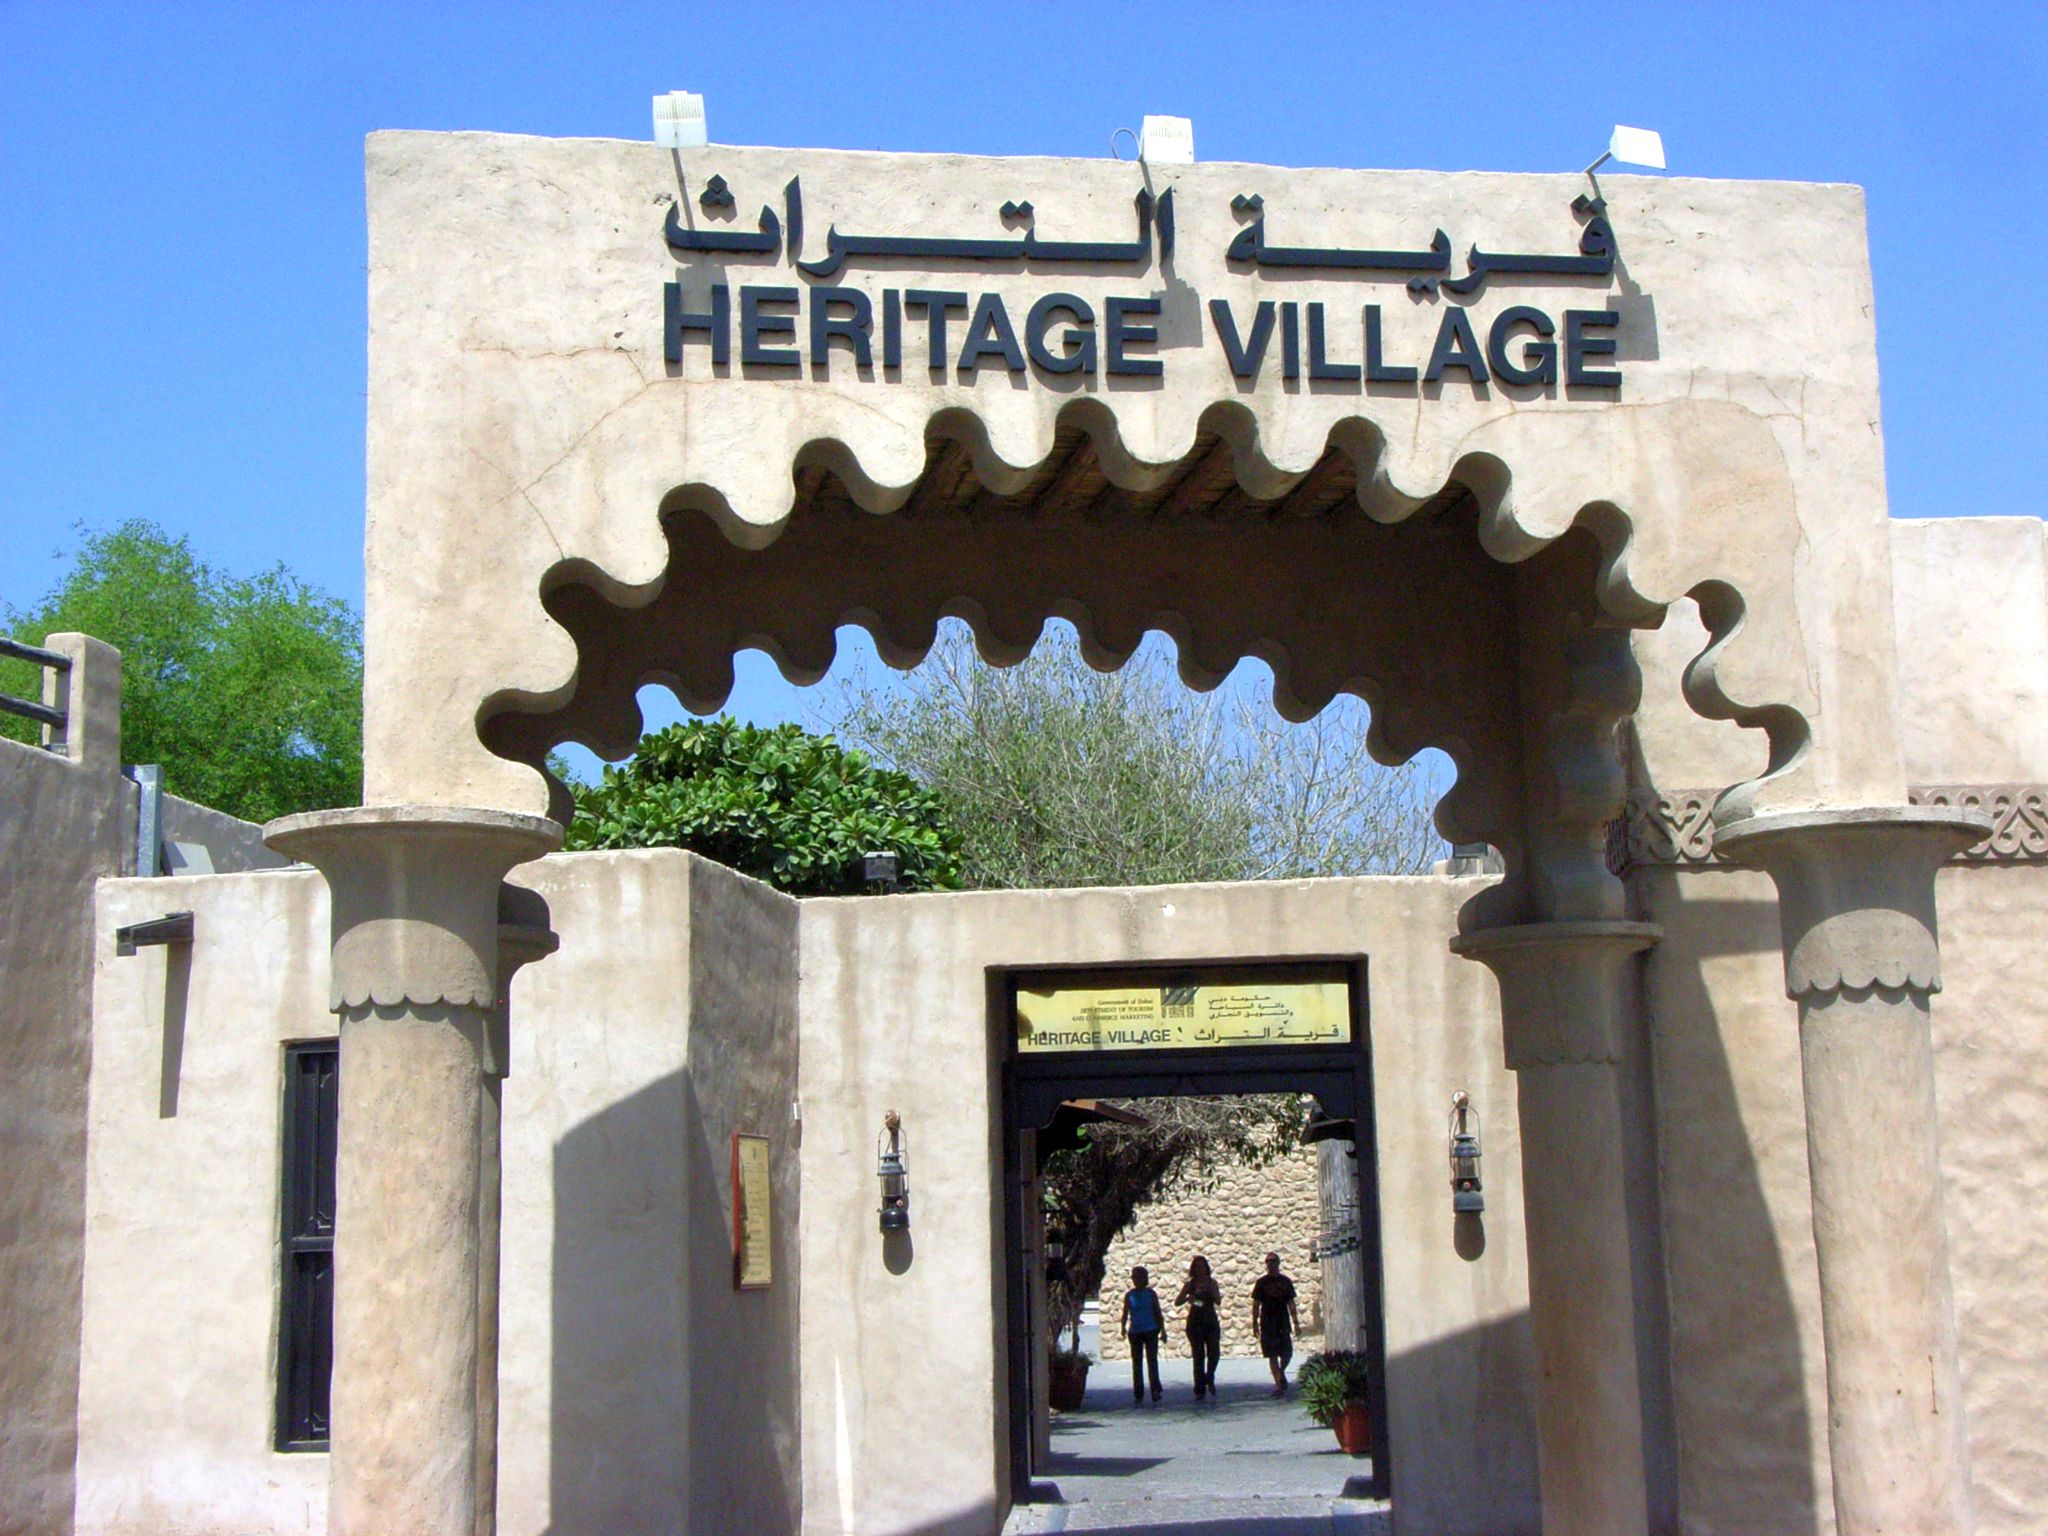 Heritage village. Деревня наследия в Дубае. Heritage Village Абу Даби. Этнографическая деревня Дубай. Херитадж Вилладж Дубай.